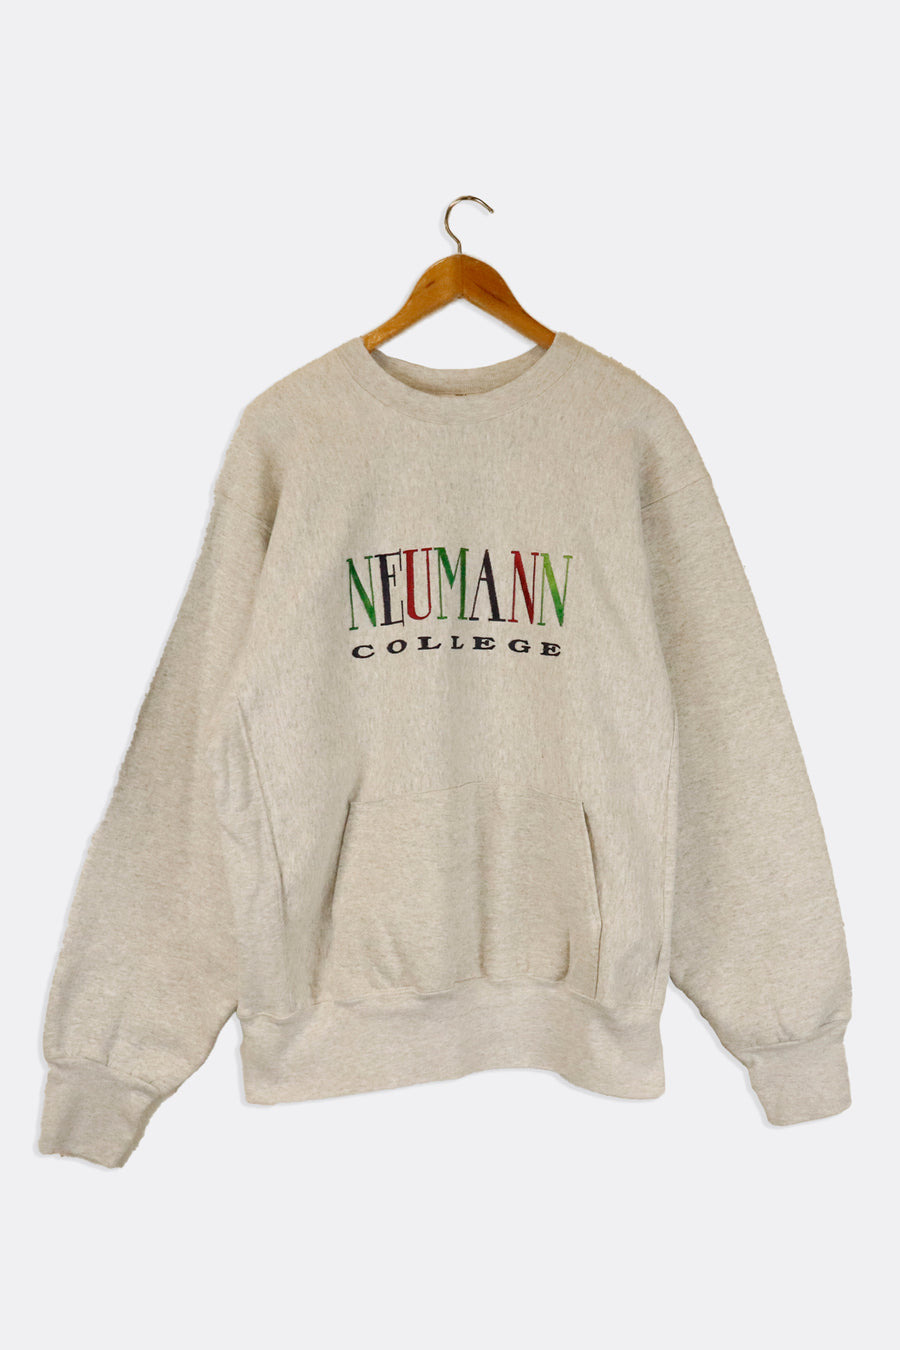 Vintage Neuman College Pocket On Front Embroidered Rainbow Font Sweatshirt Sz M